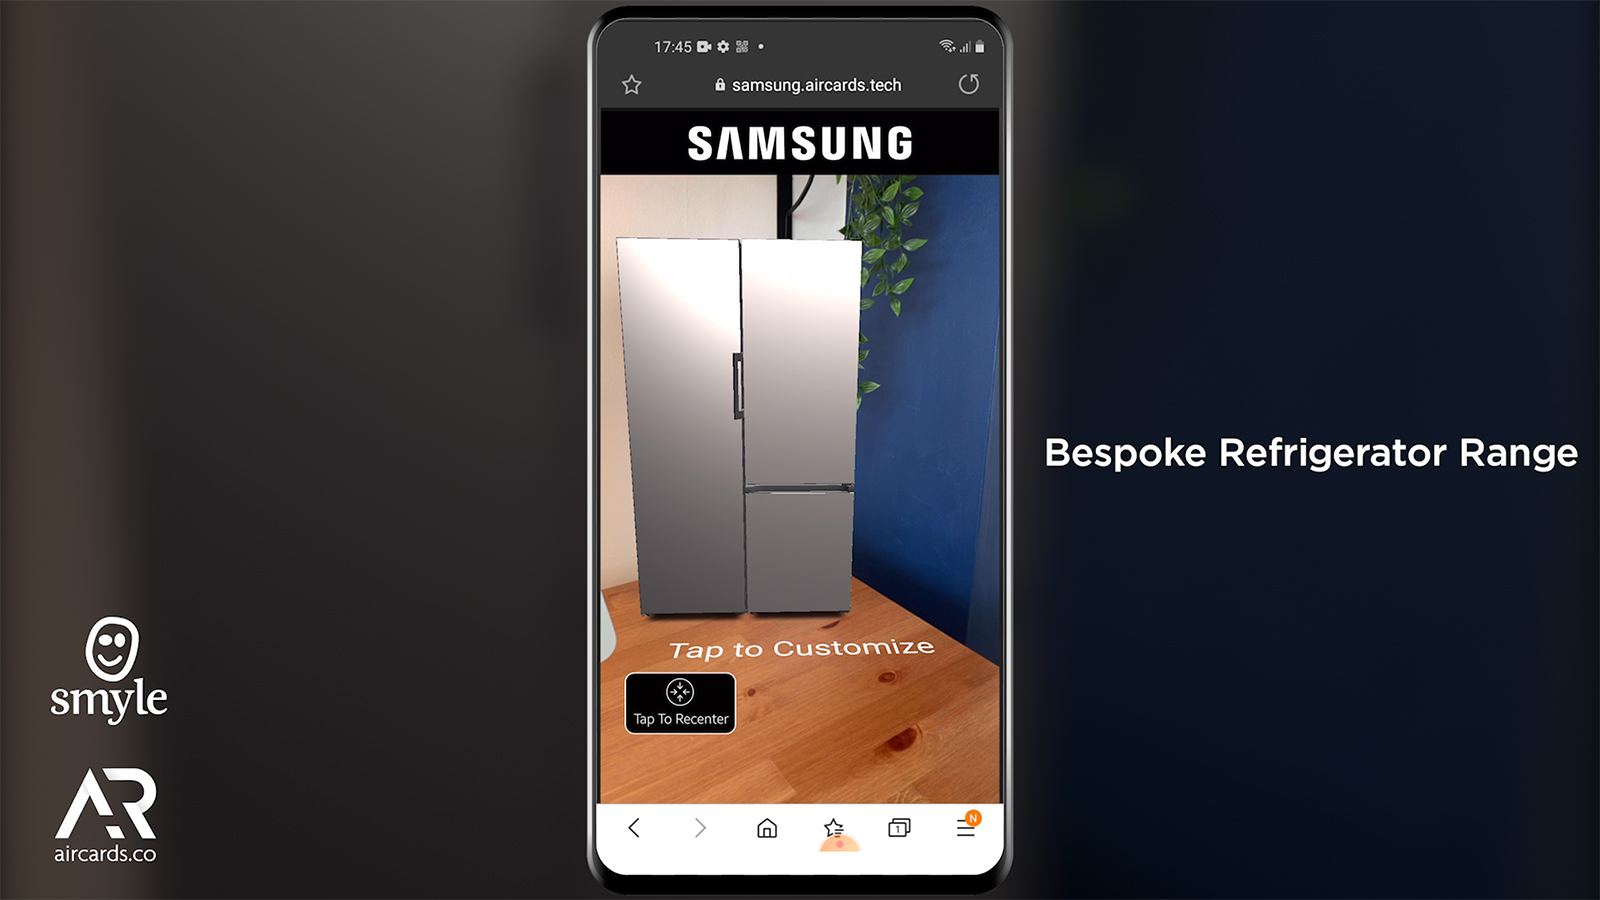 Web AR 3D Product Demonstration of the Samsung Bespoke Refrigerator Range